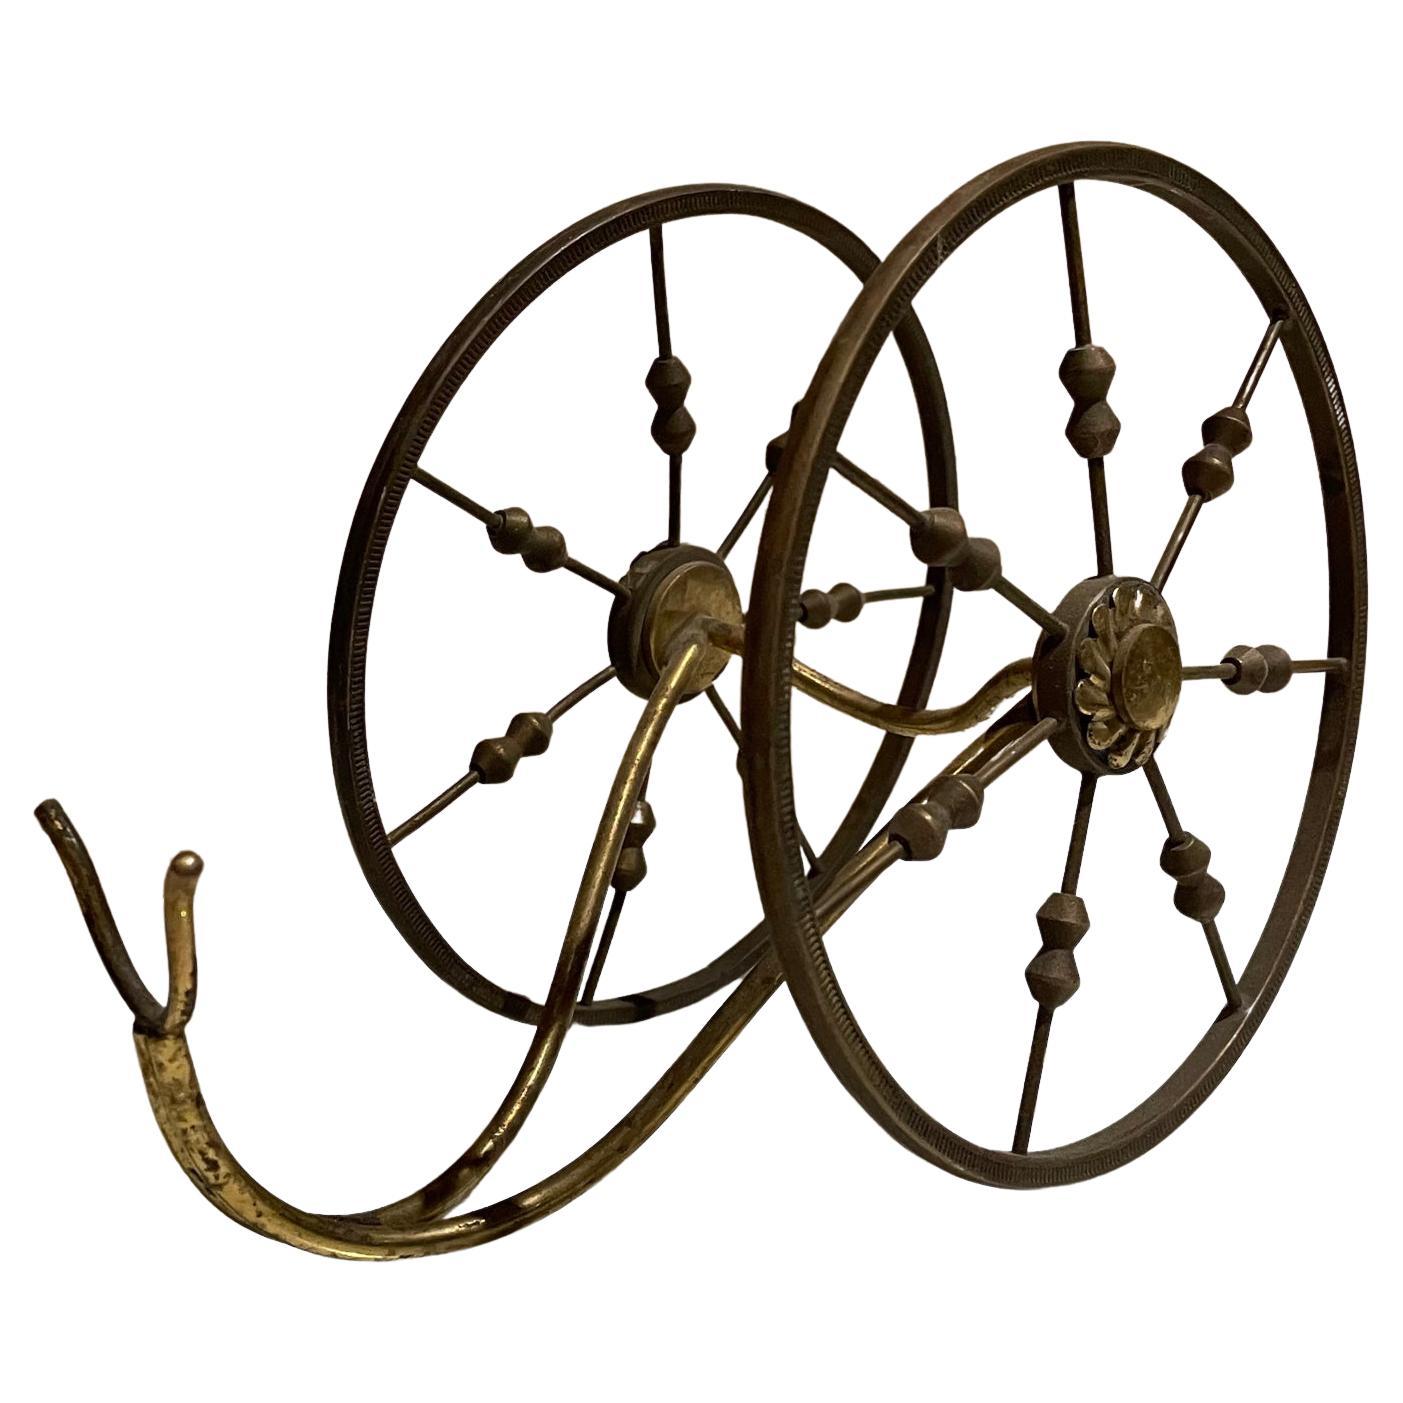 1950s Decorative Wine Bottle Holder Spoke Wheel in Sculptural Brass from Italy  